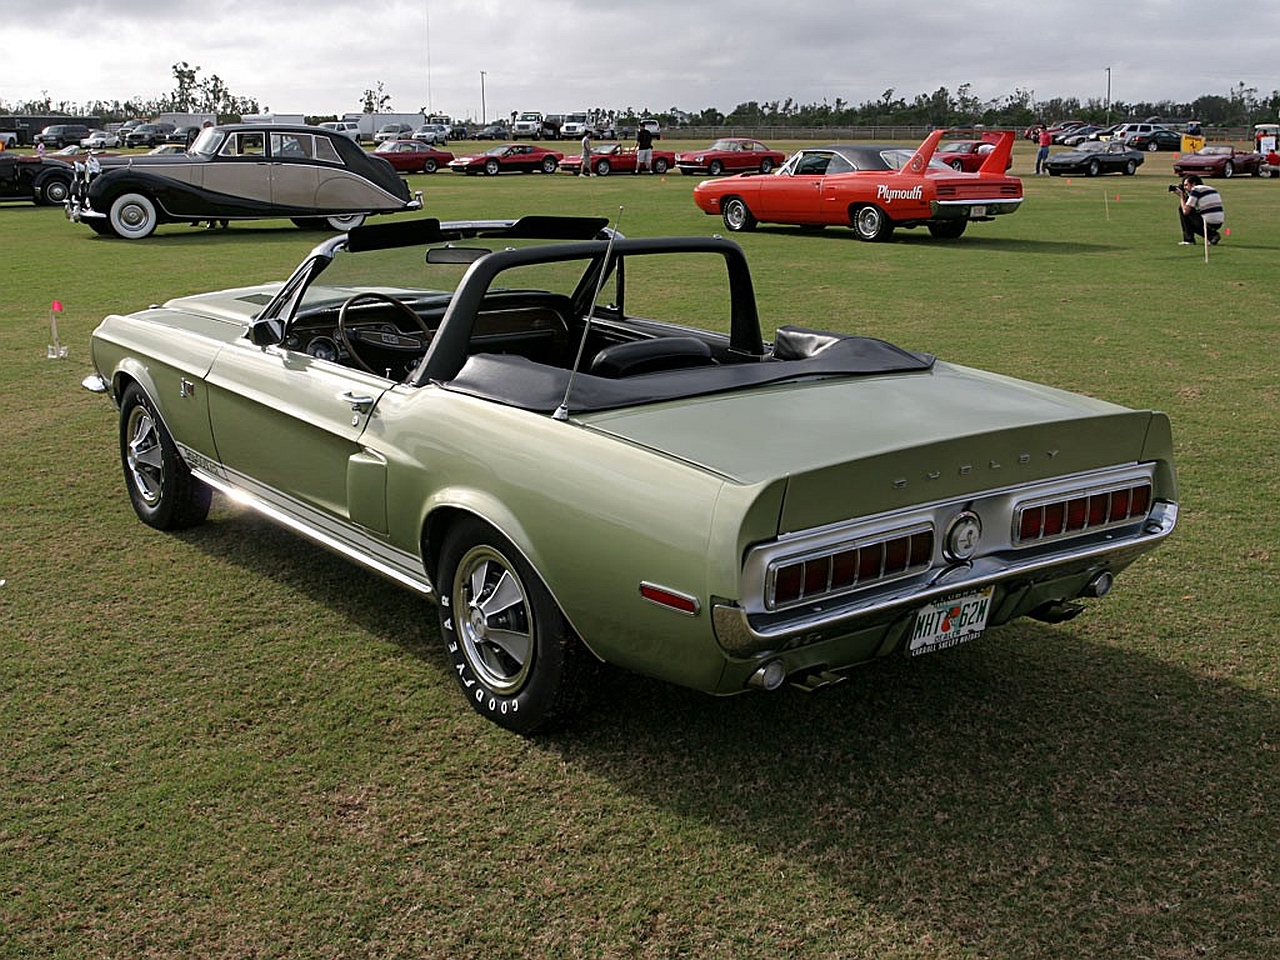 Descarga gratuita de fondo de pantalla para móvil de Vehículos, Ford Mustang Shelby.